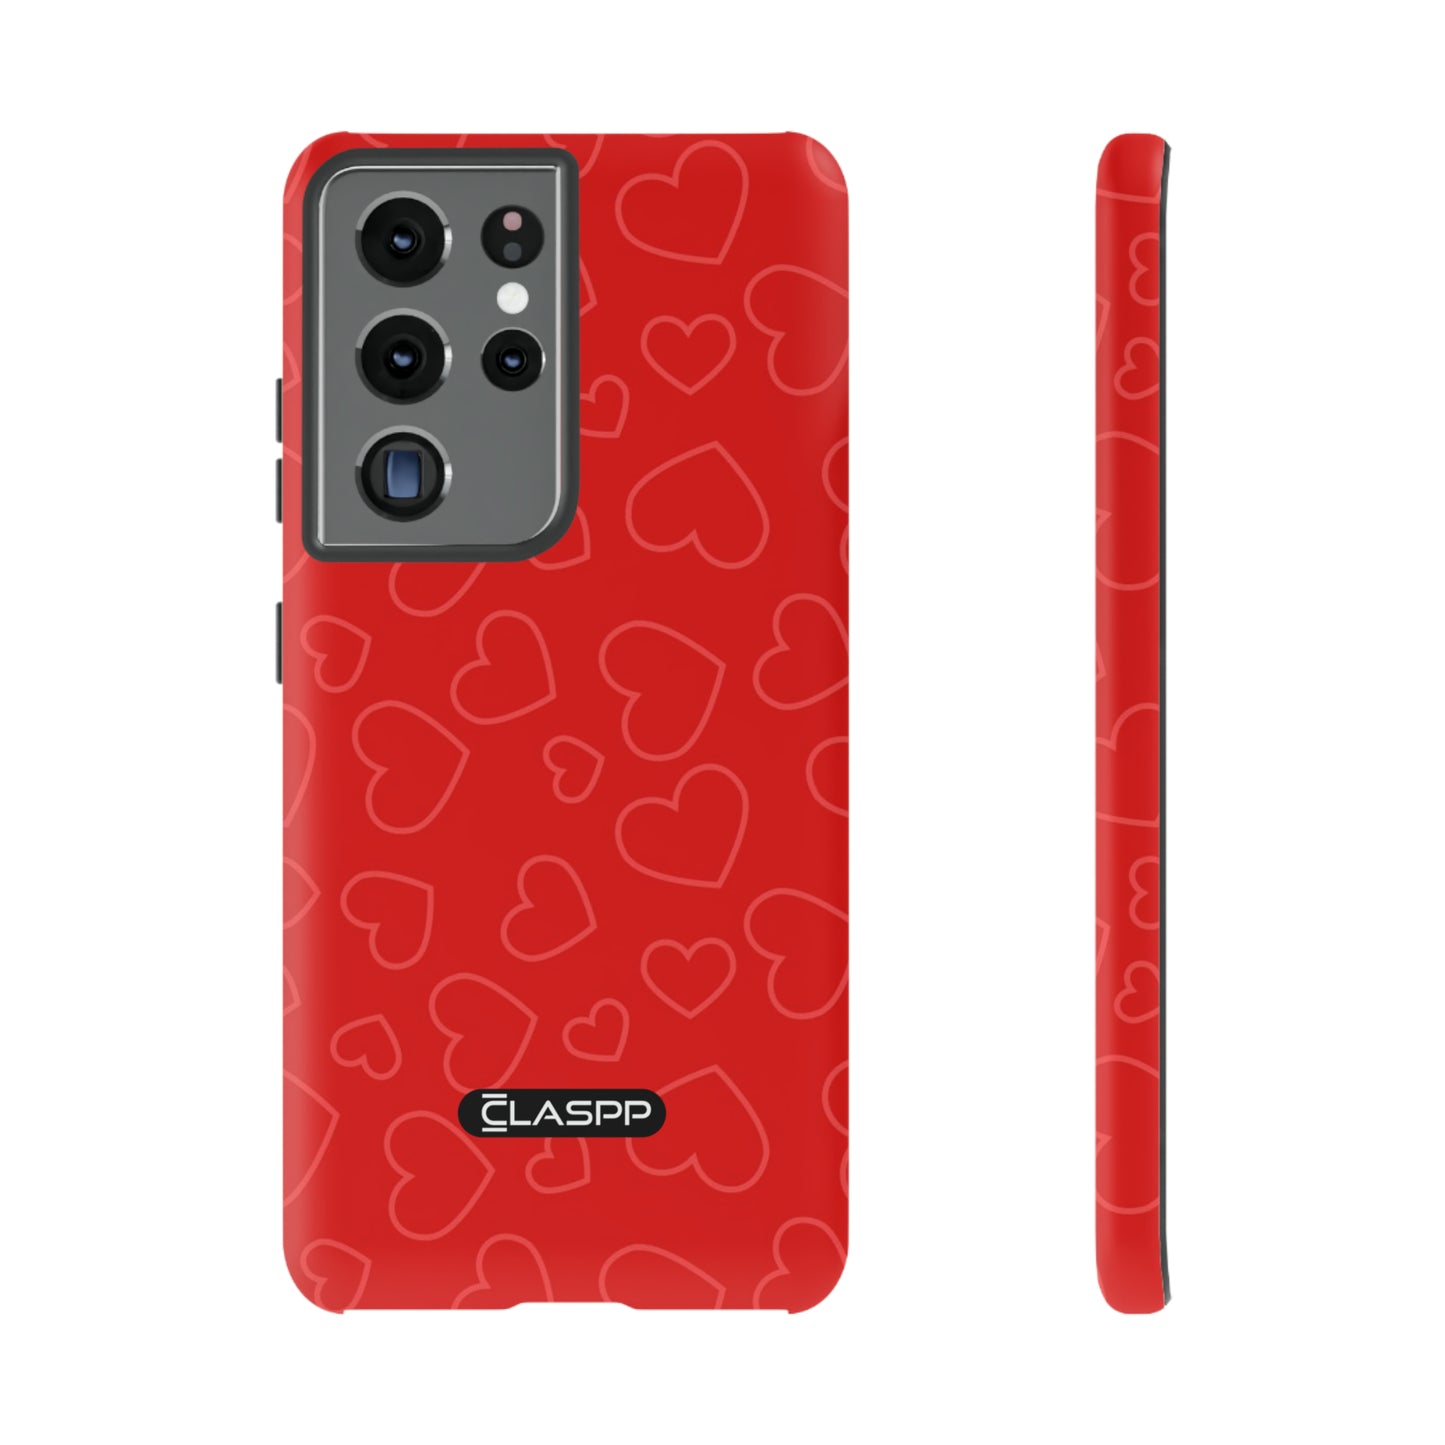 Samsung Galaxy S21 ultra Valentine's Day phone case